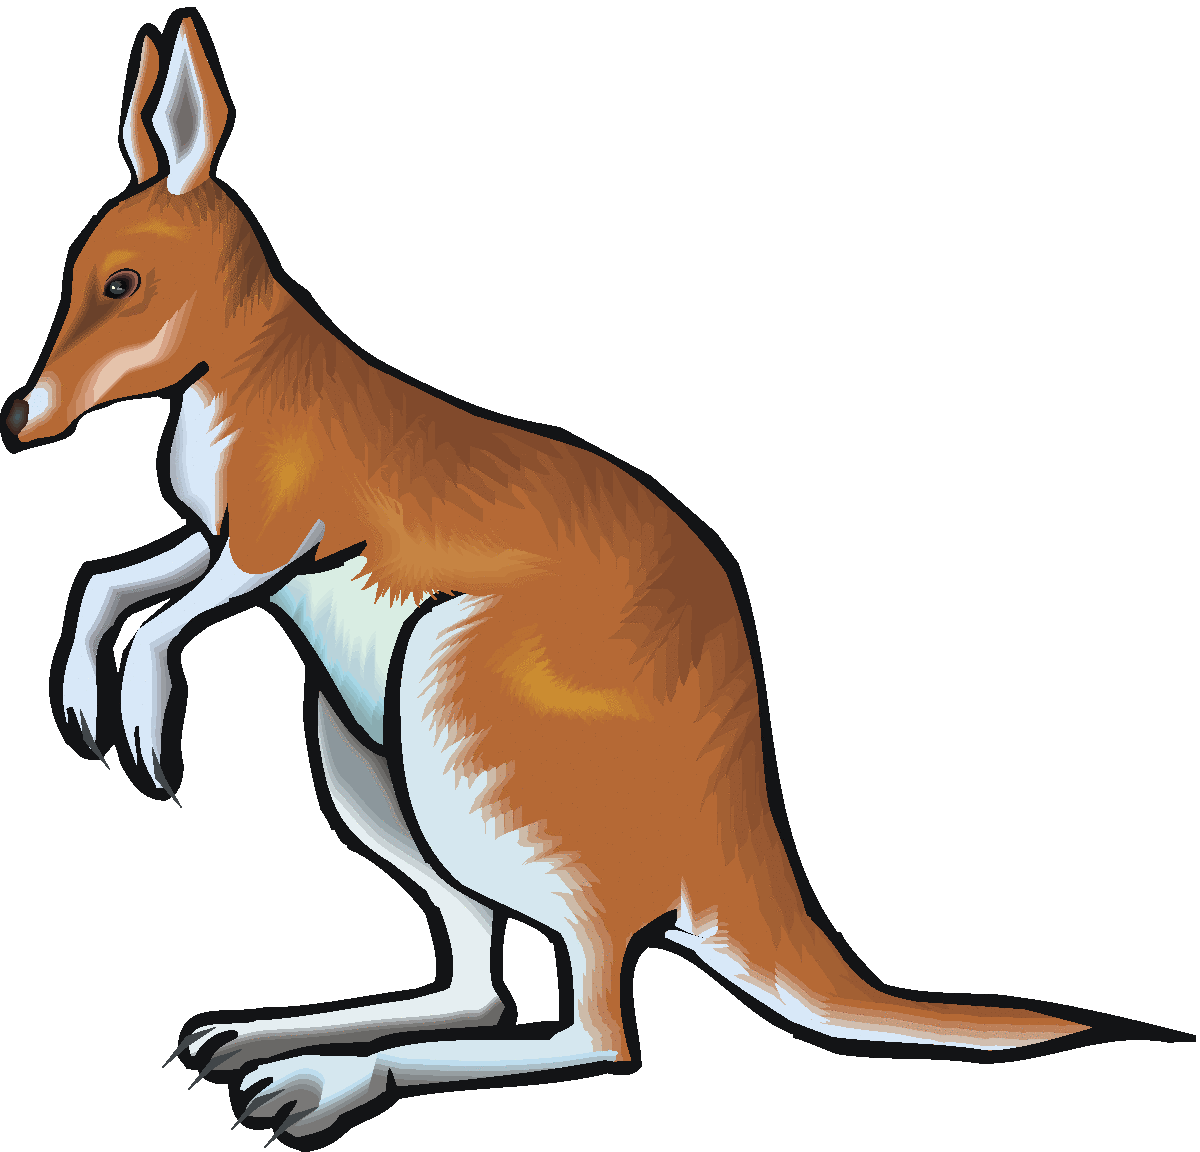 kangaroo joey clipart - photo #6